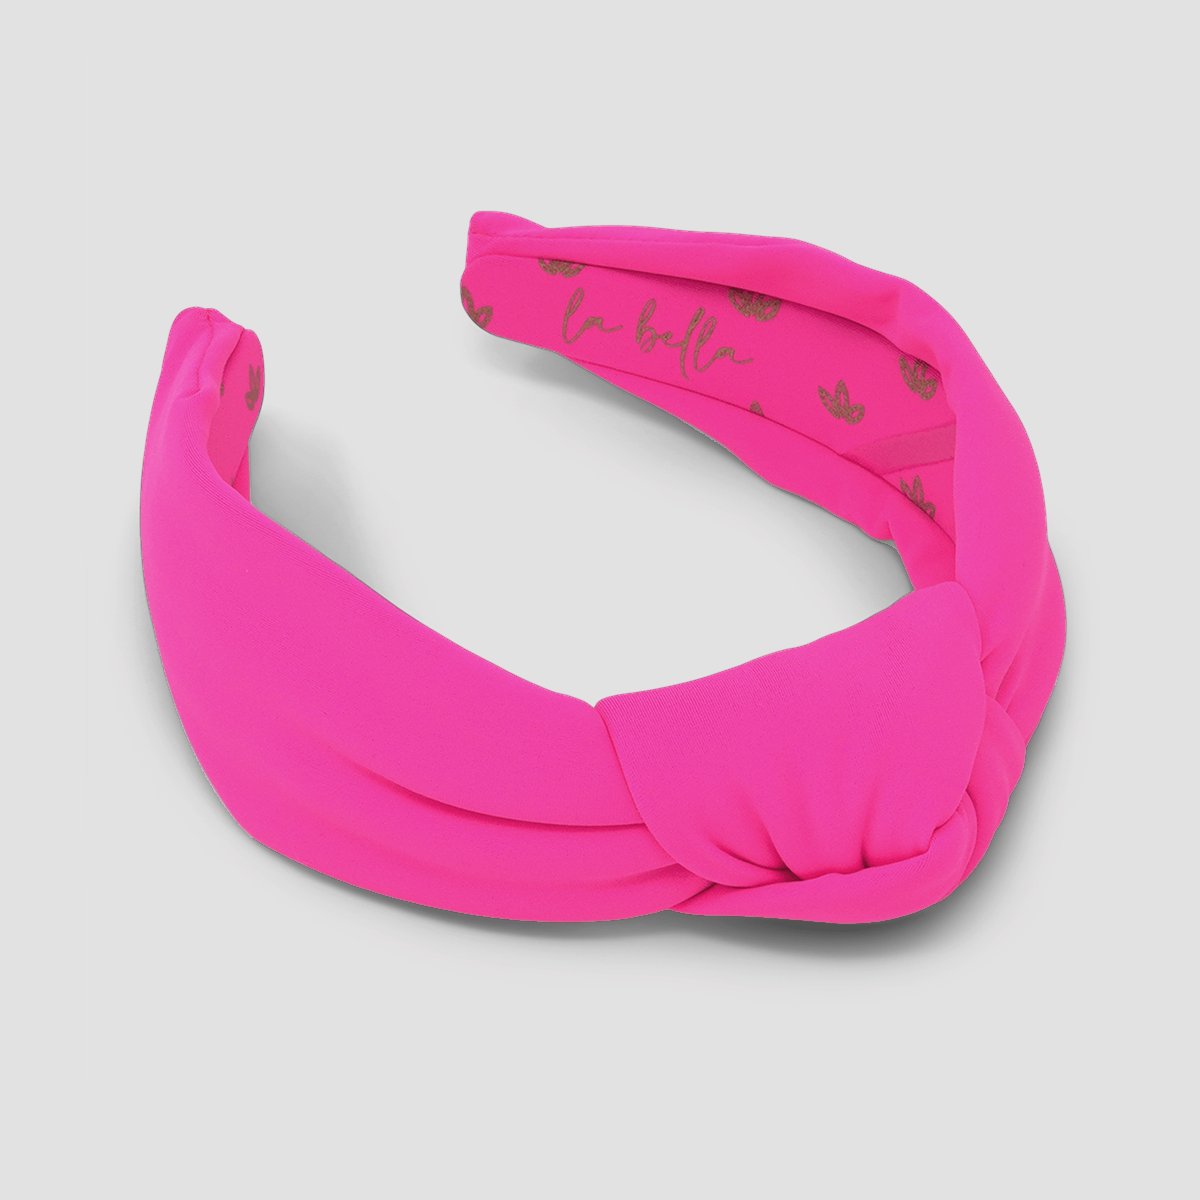 Woosh Pink Neoprene Headband by La Bella with gold flower detailing on the inside of the headband